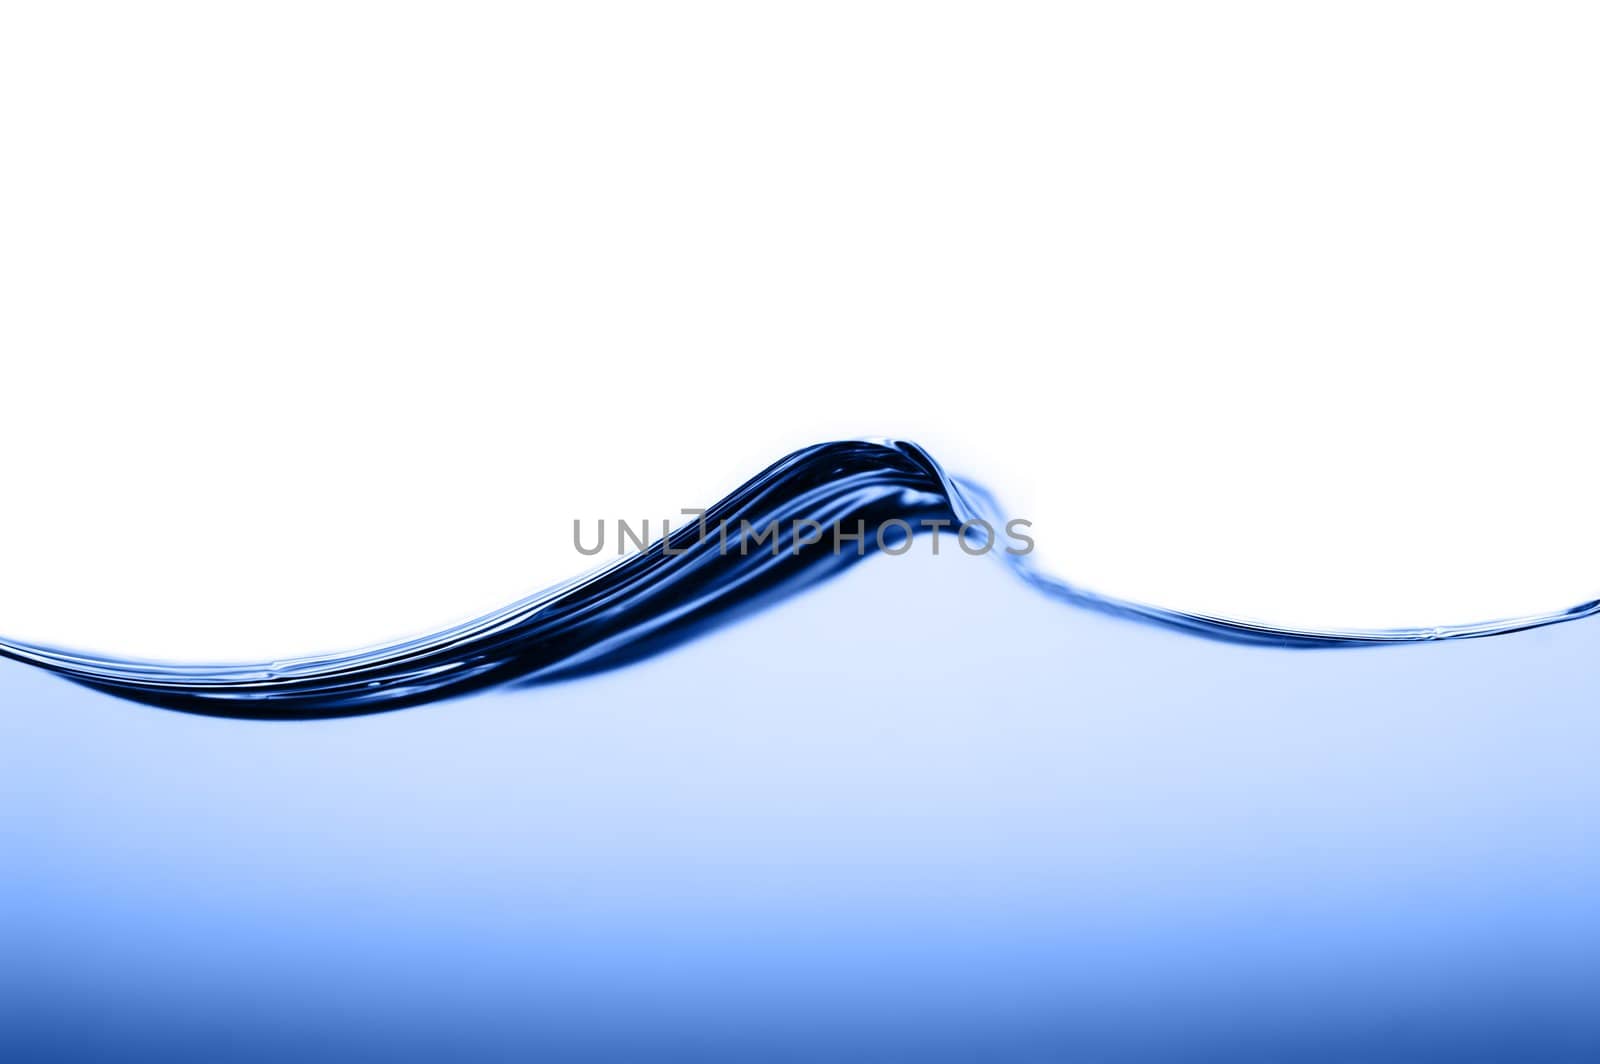 Clear Water by cardmaverick